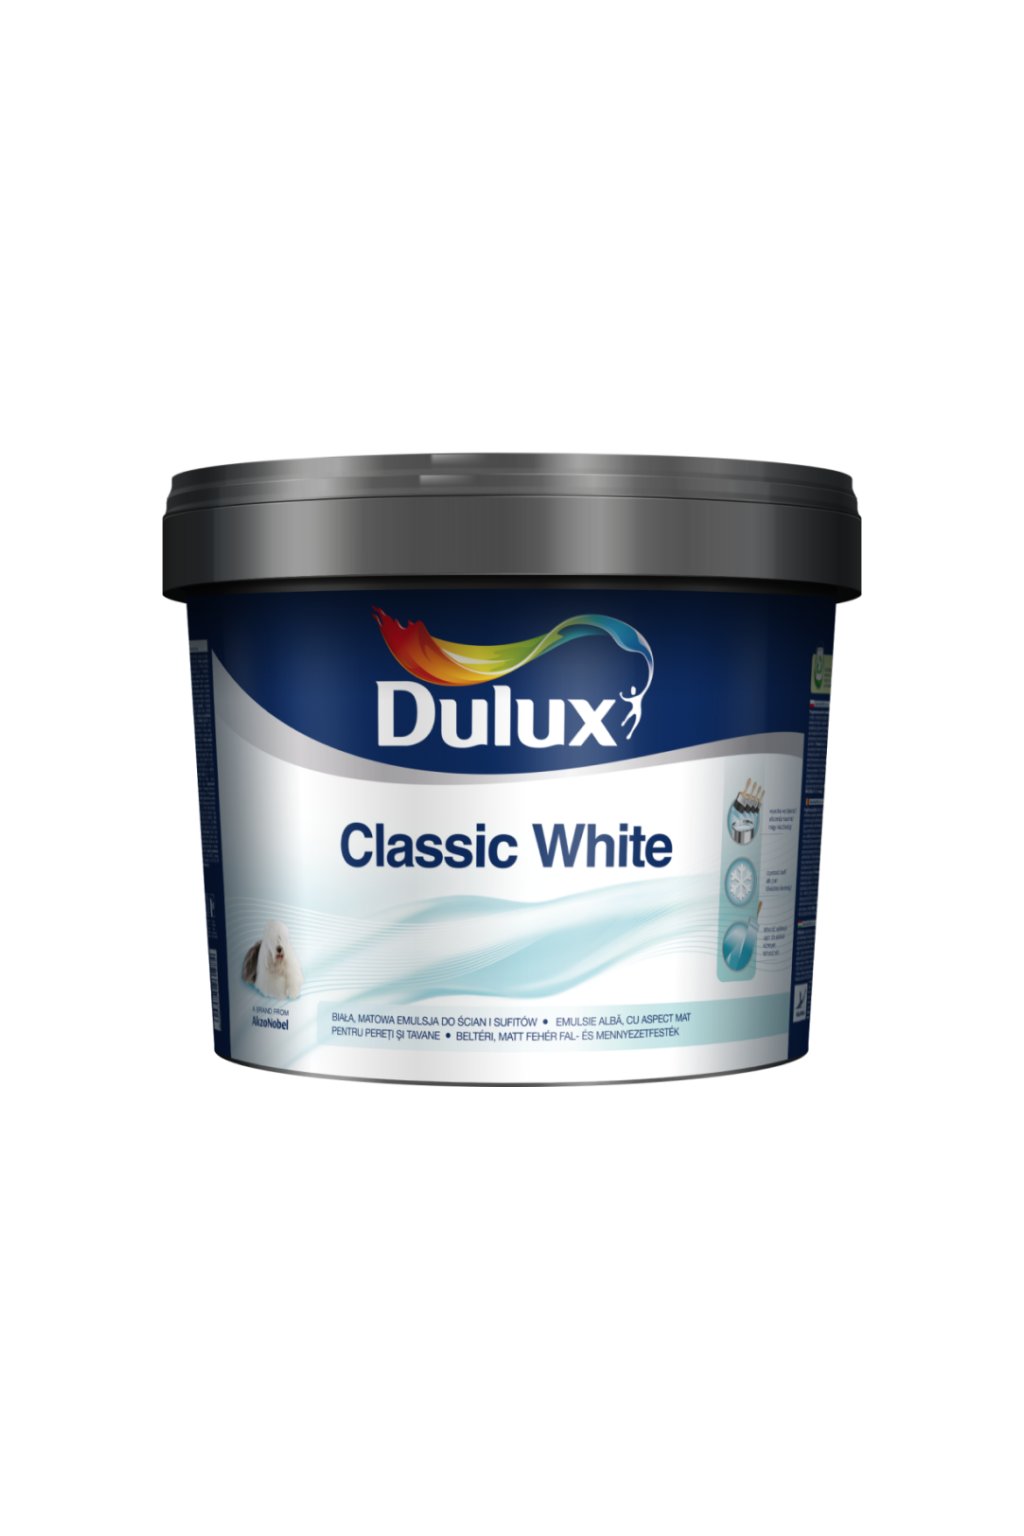 dulux white classic white 740